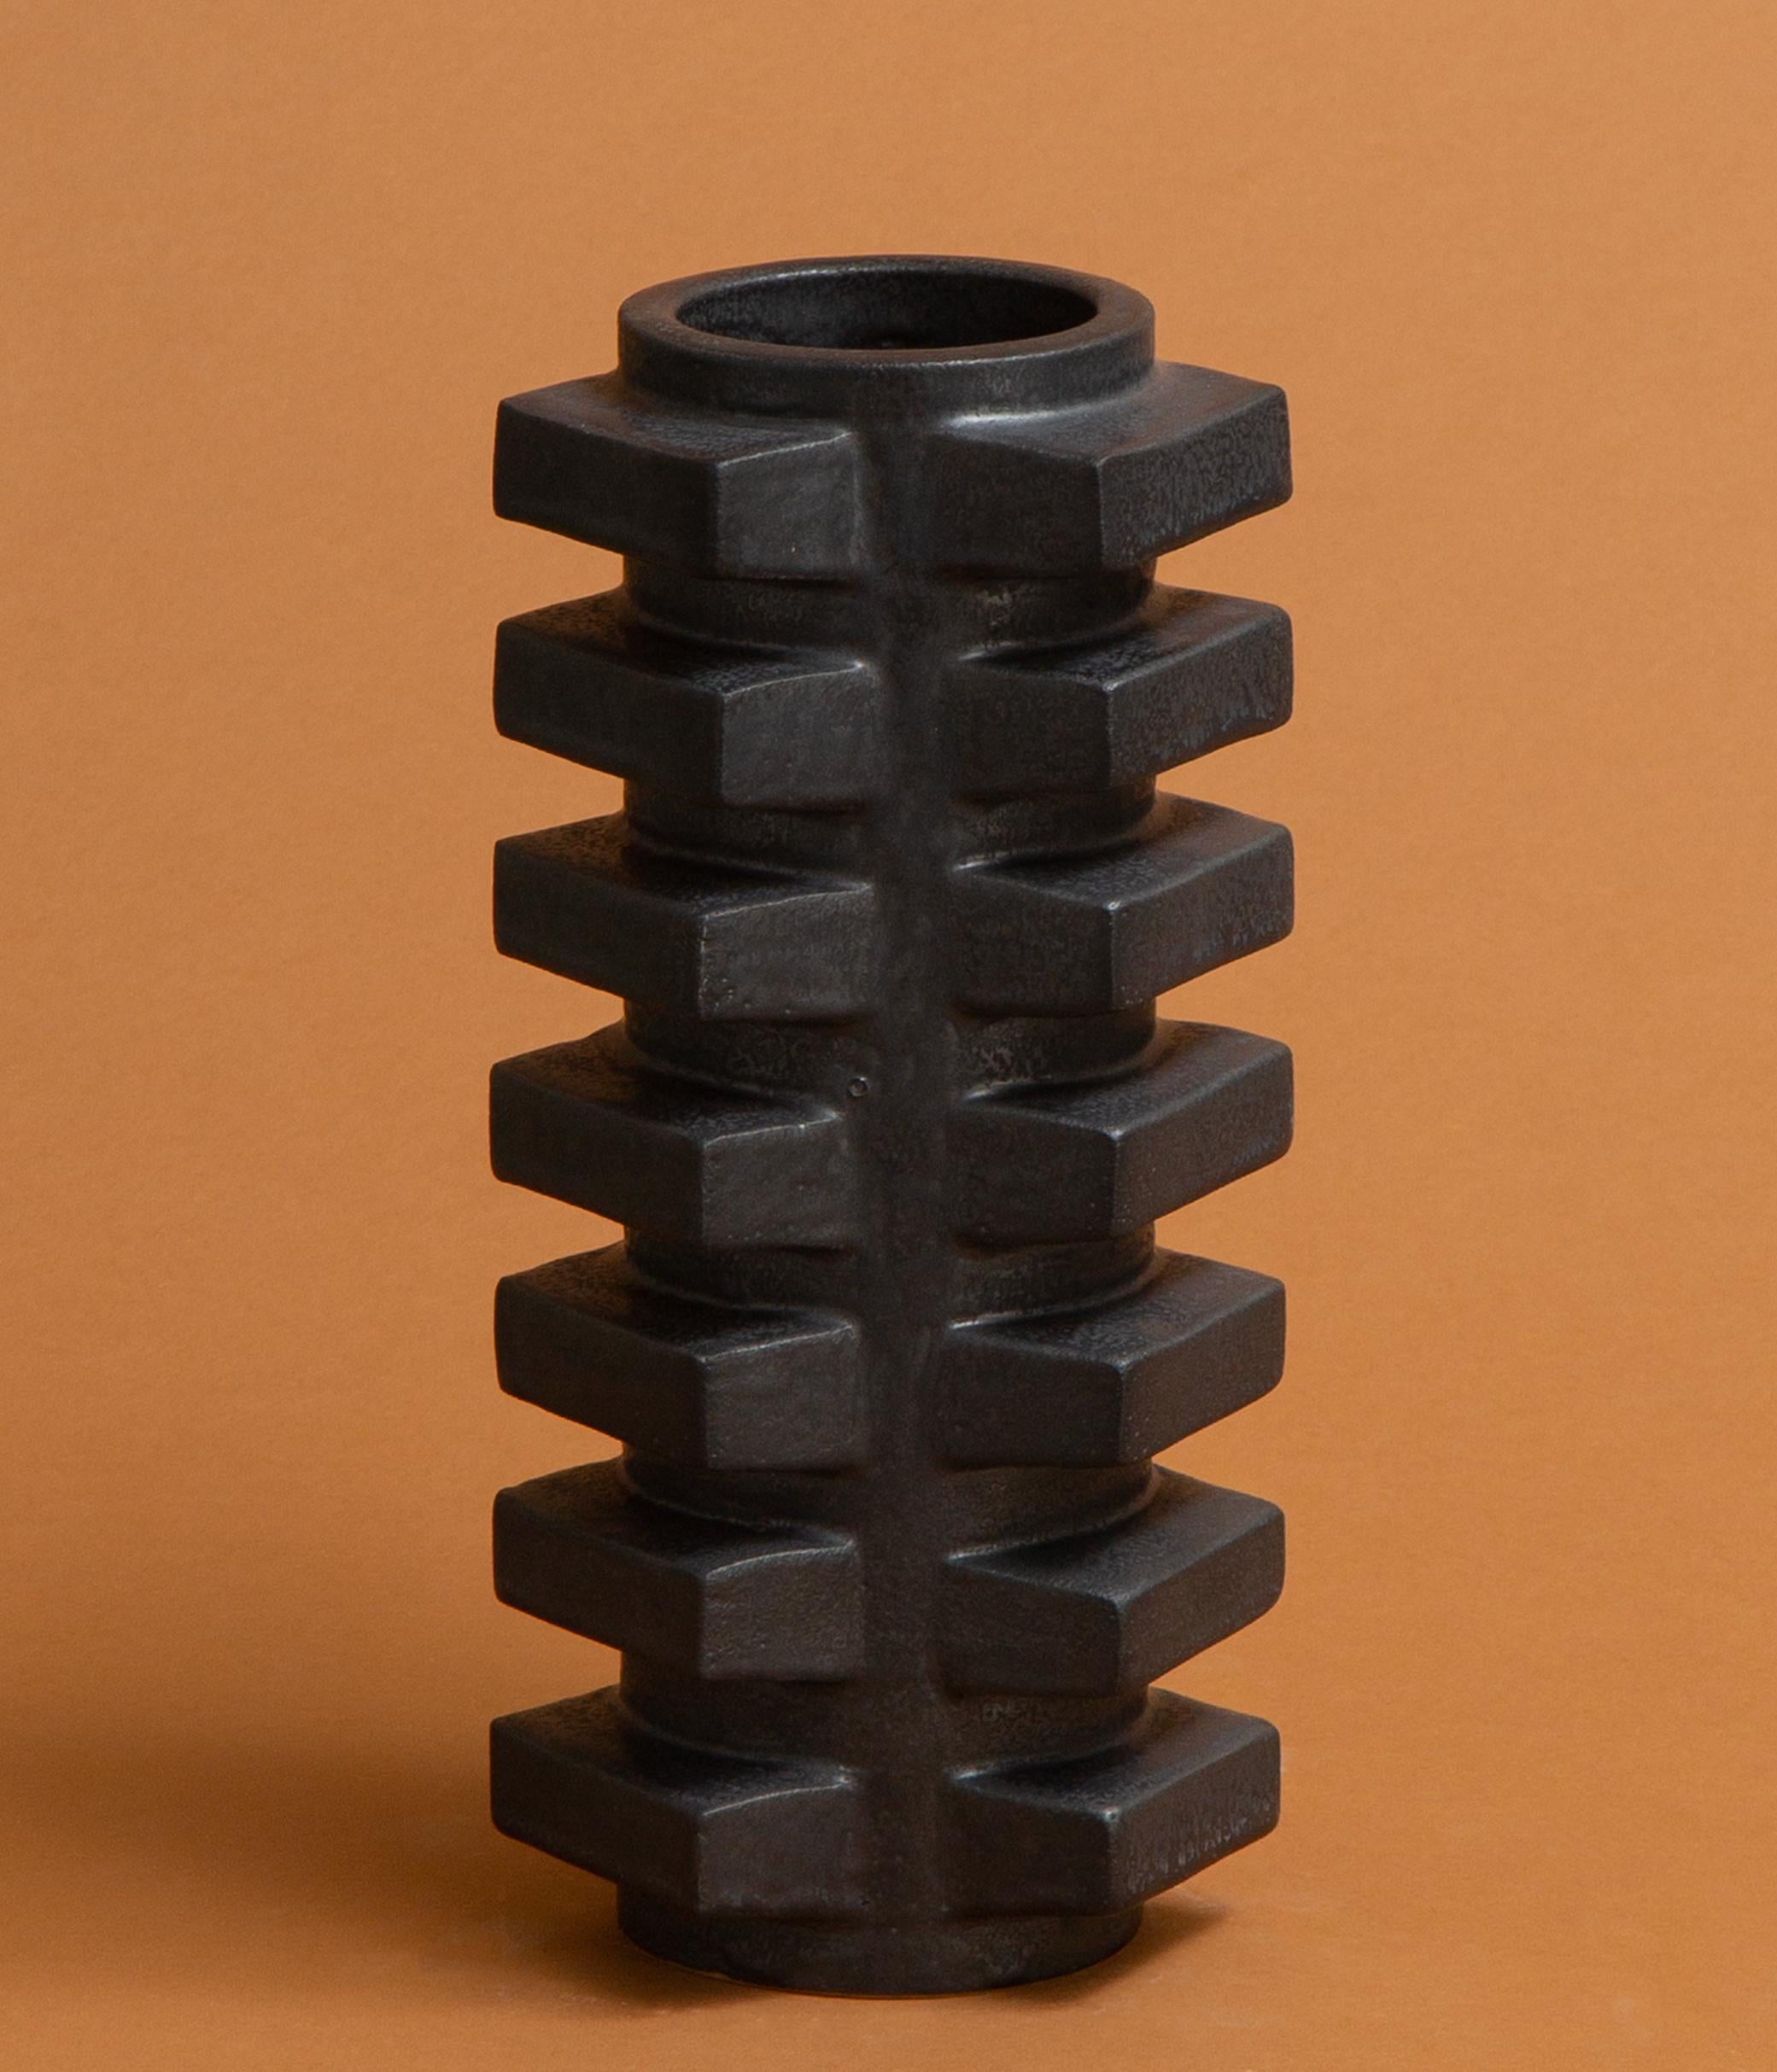 Scandinave moderne Contemporary, Black Sculptural Vase by Marie Beckman, En stock en vente